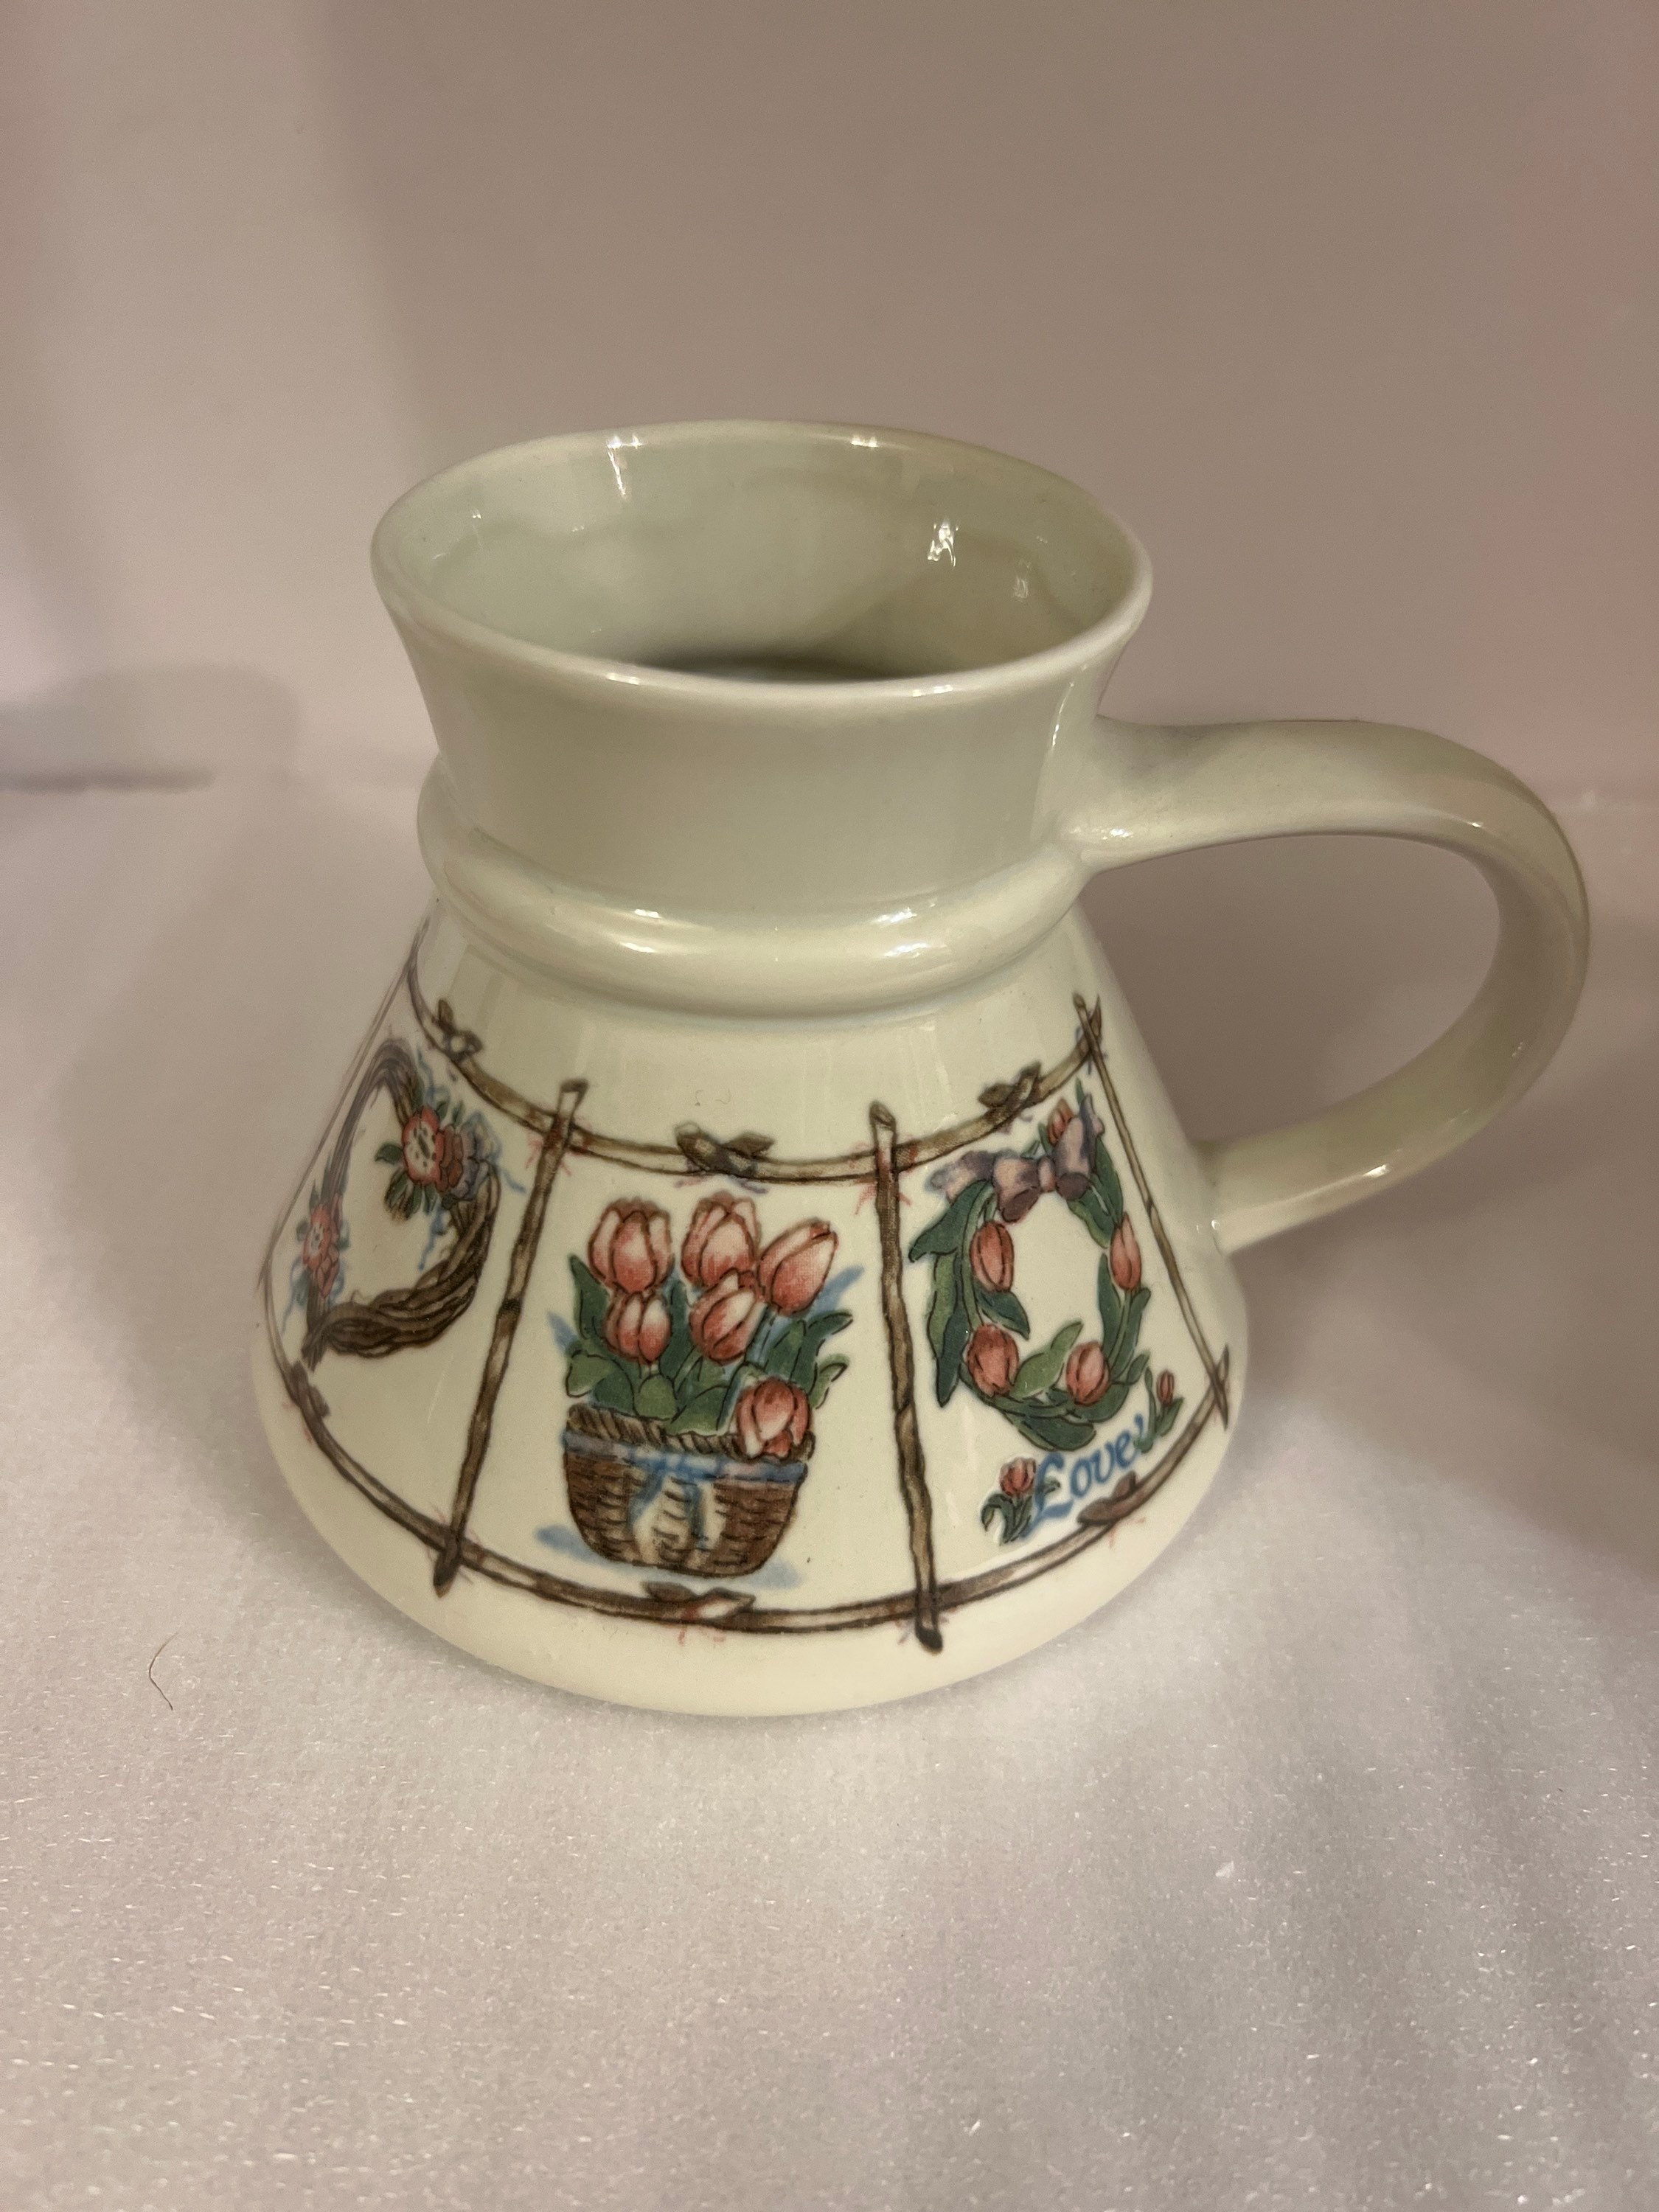 No Spill Mug - Vintage - household items - by owner - housewares sale -  craigslist